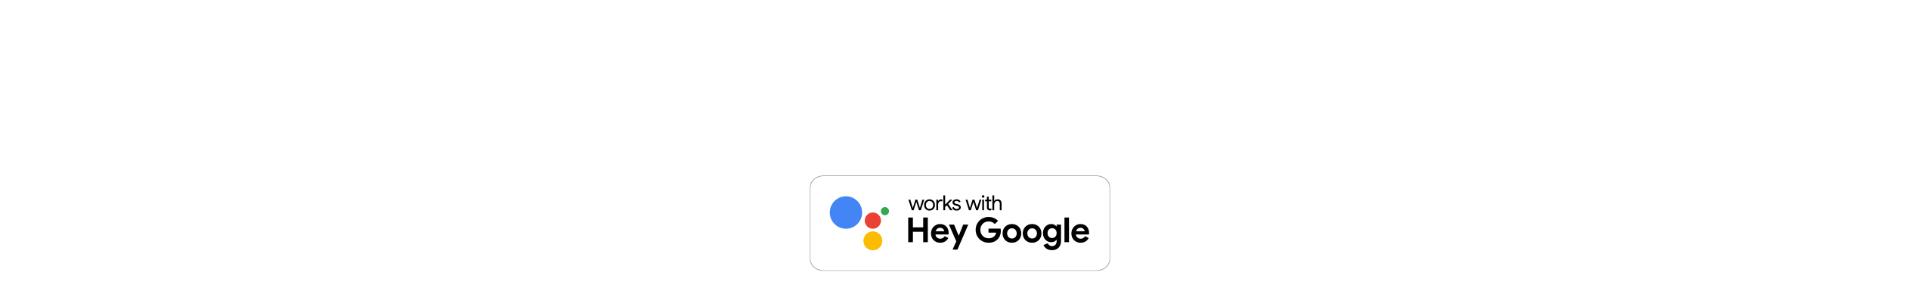 Hey Google logo